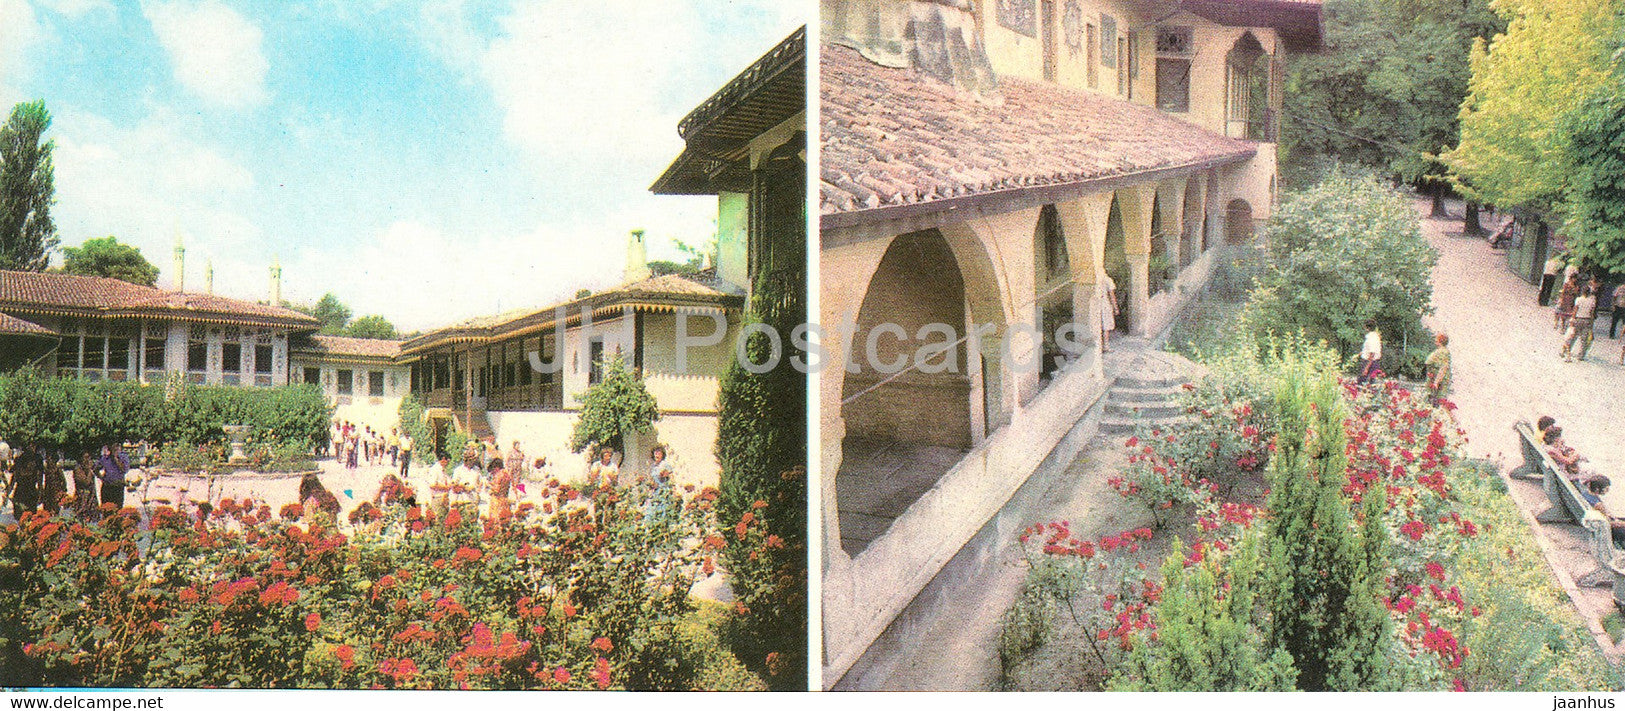 Bakhchysarai - facades of residential and social buildings - Arcade of Khan Dzhami Crimea - 1984 - Ukraine USSR - unused - JH Postcards